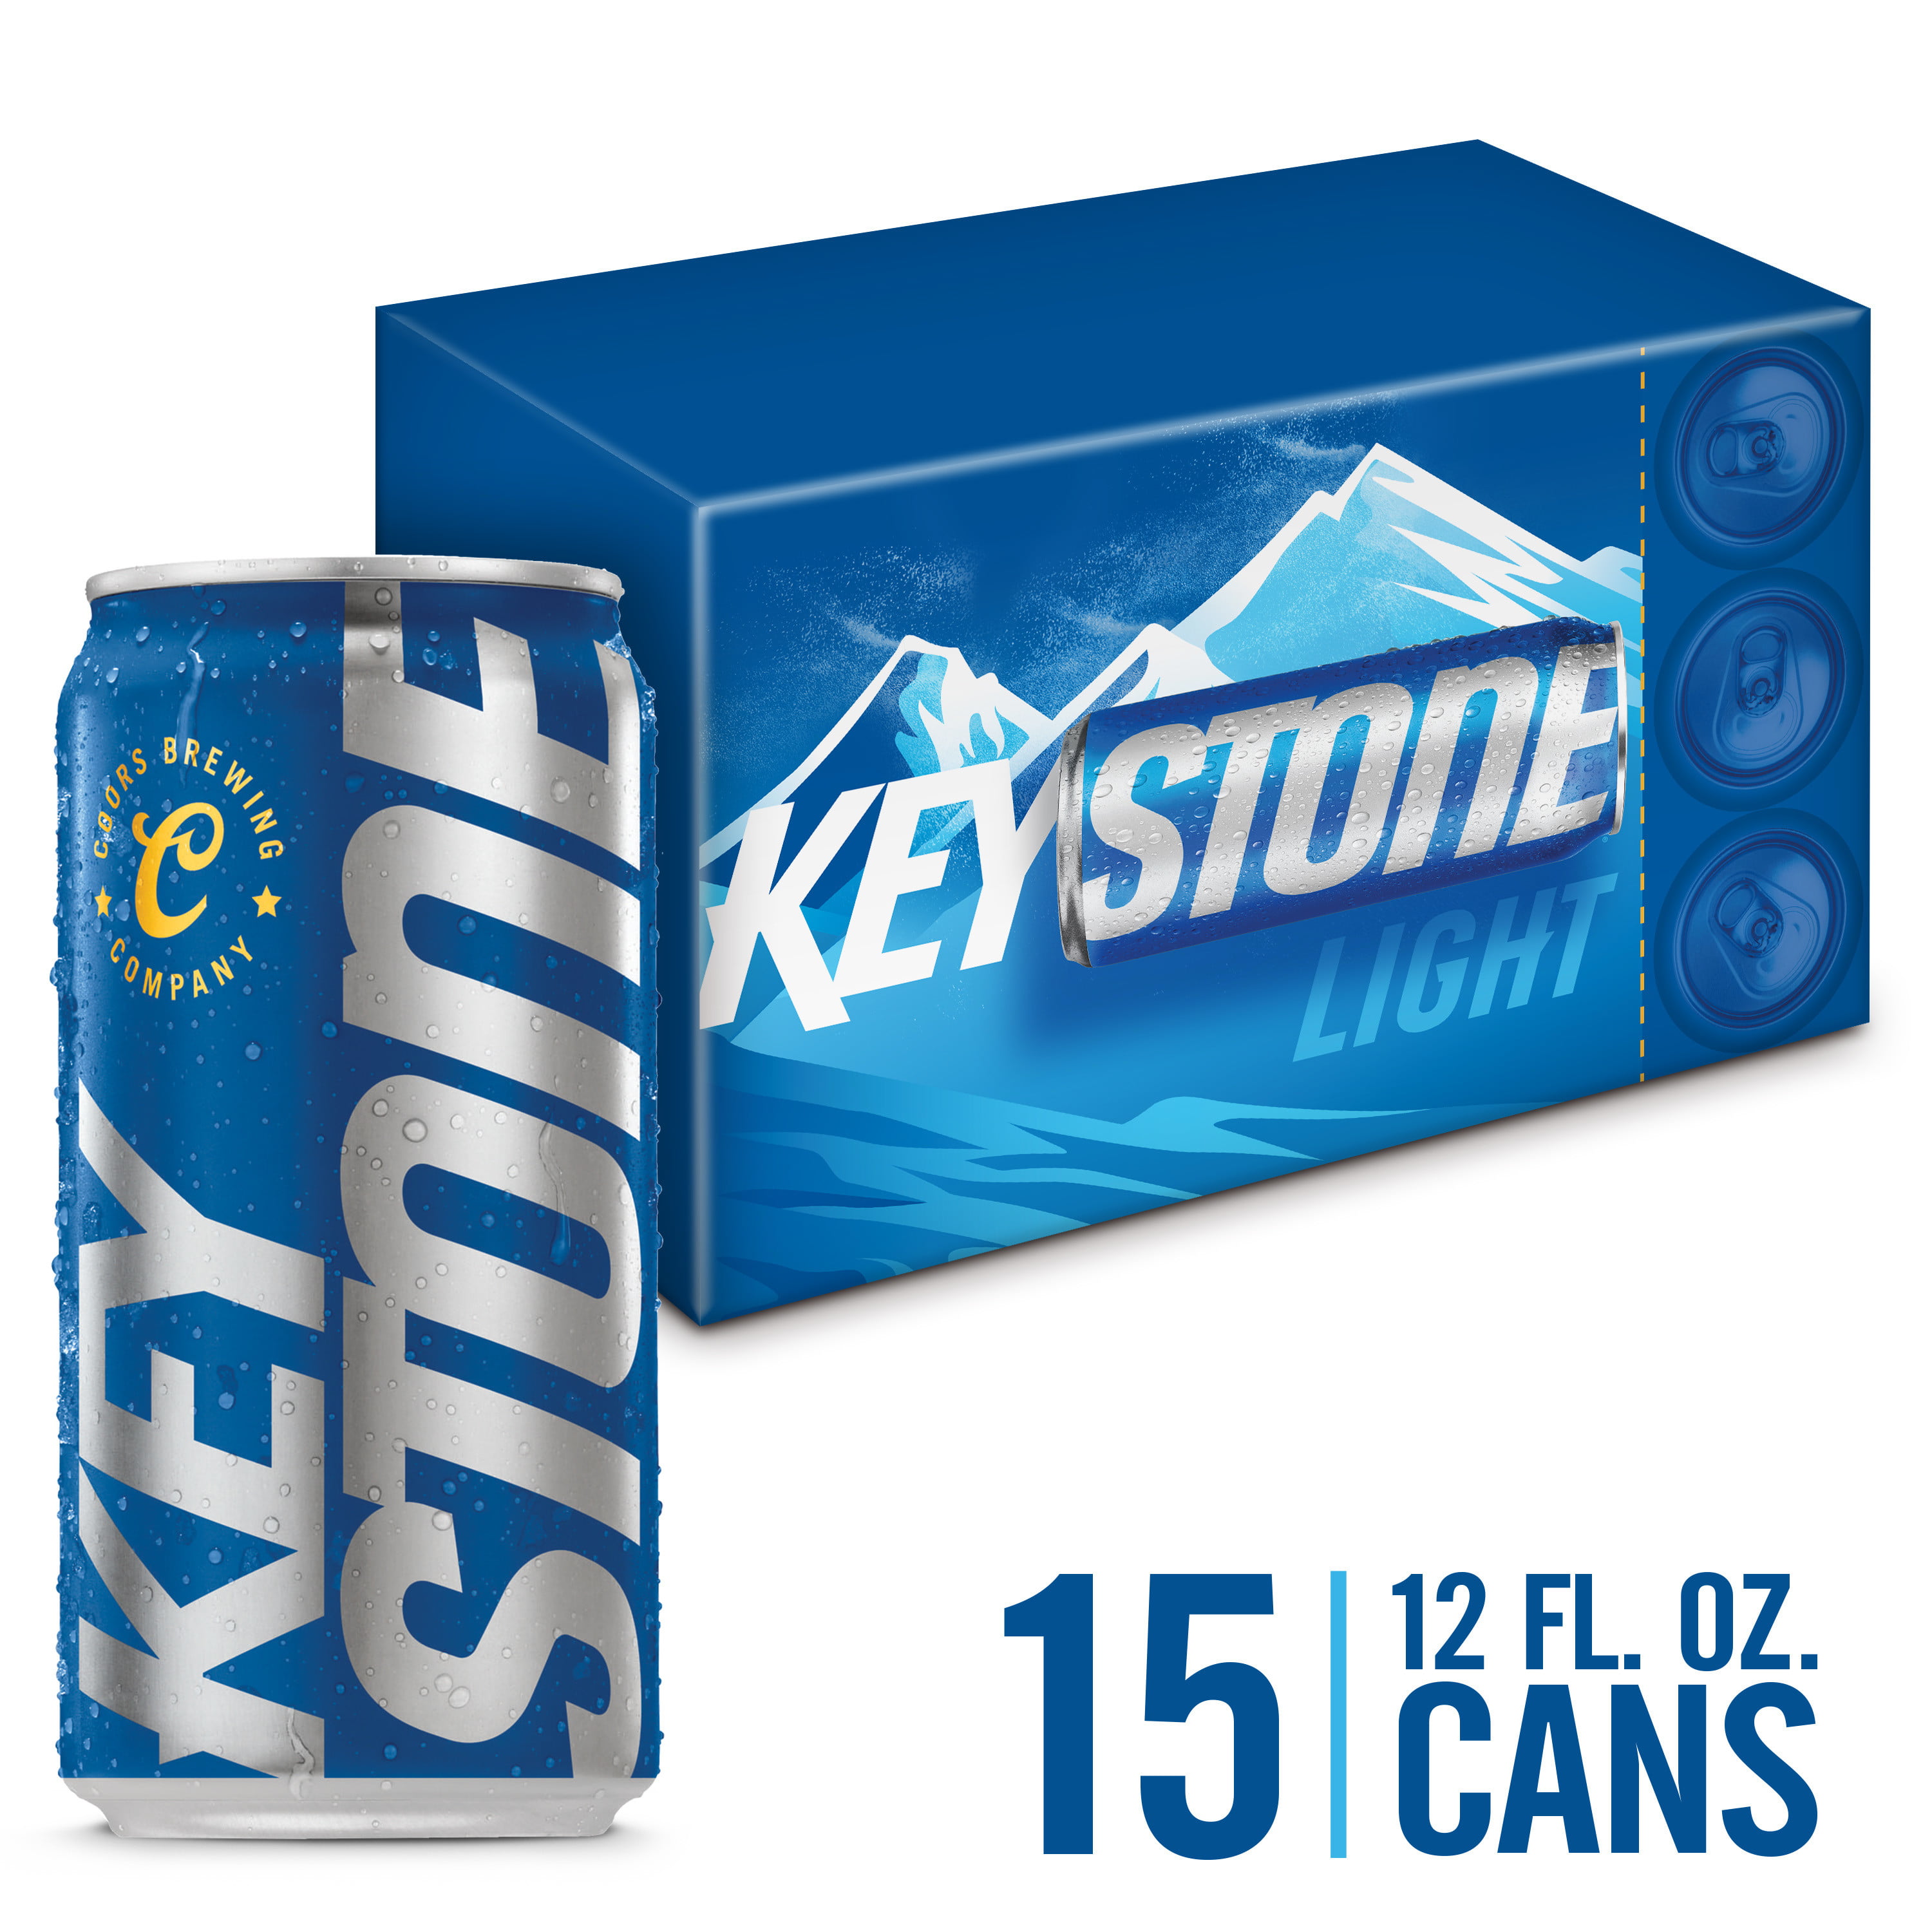 keystone-light-lager-beer-4-1-abv-15-pack-12-oz-beer-cans-walmart